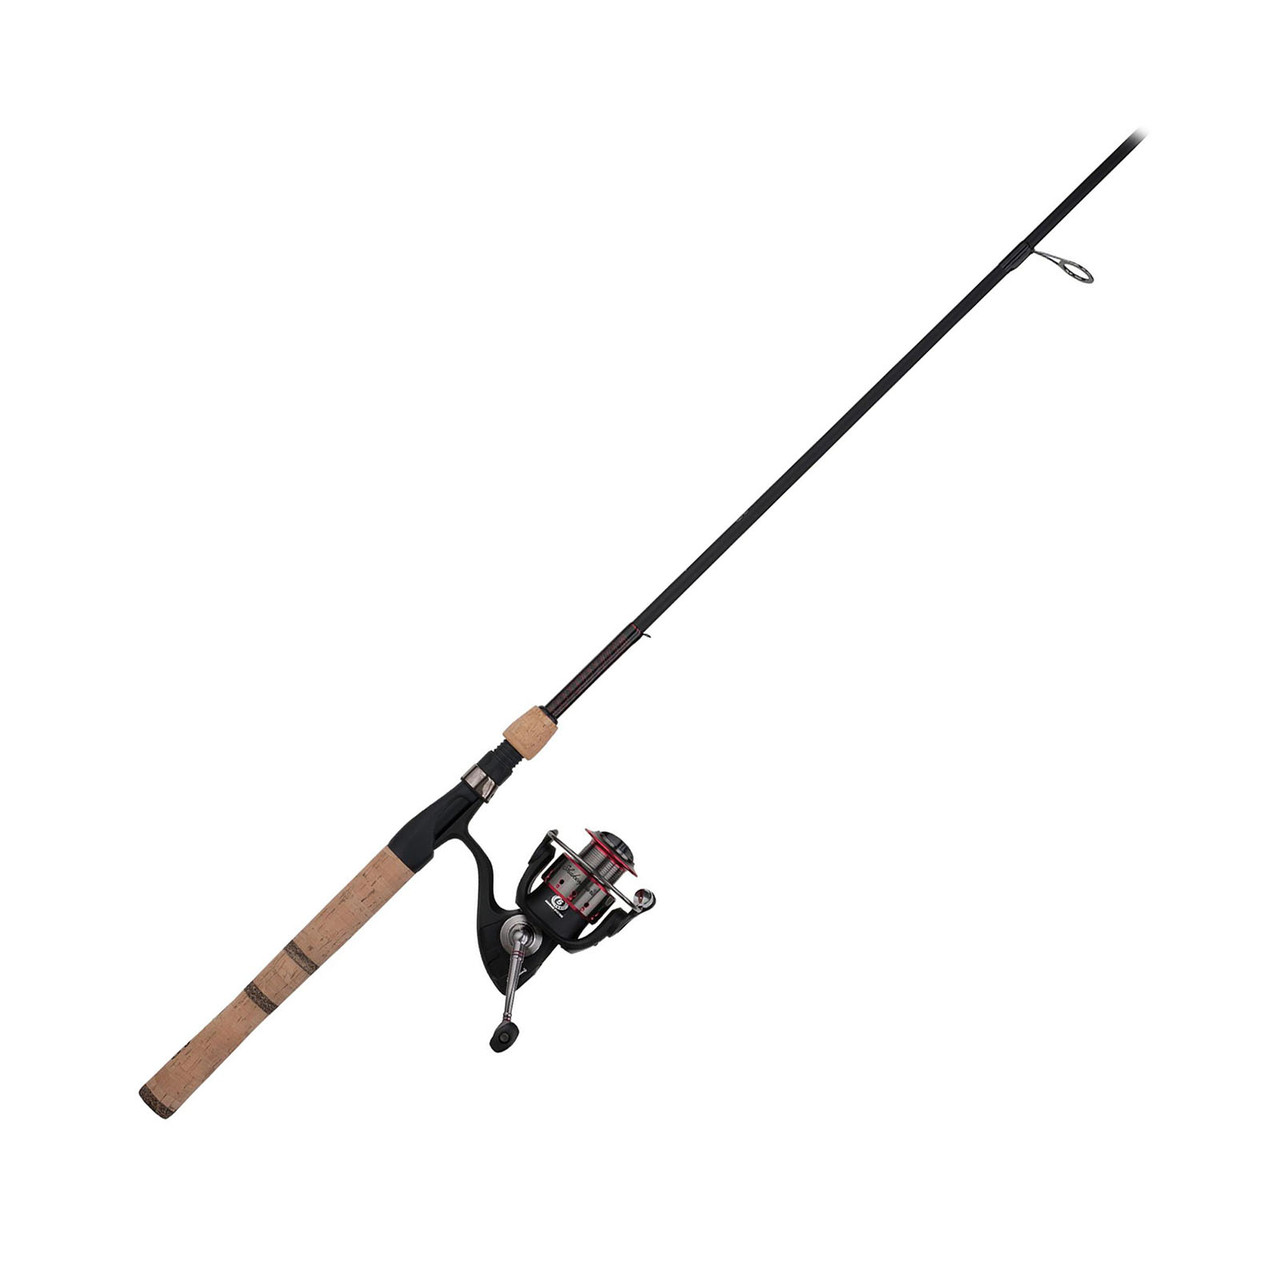 Ugly Stik GX2 Travel Spinning Fishing Rod and Reel Combo, Medium